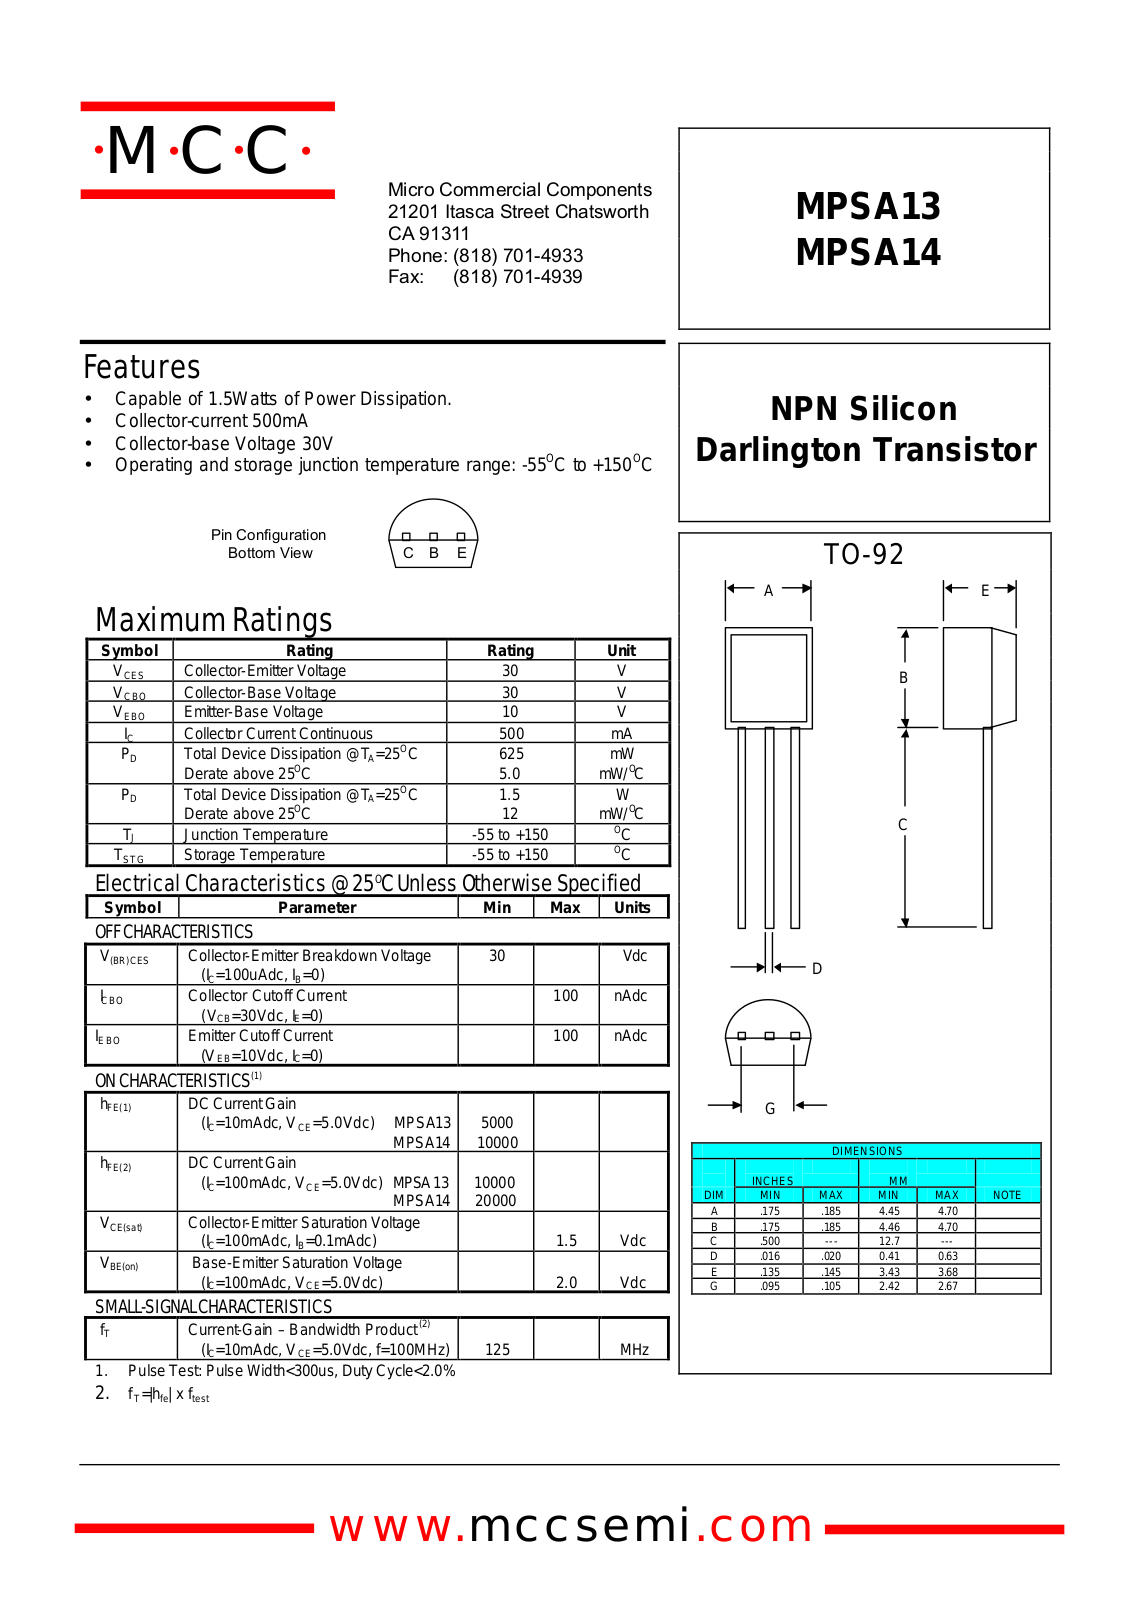 MCC MPSA13, MPSA14 Datasheet